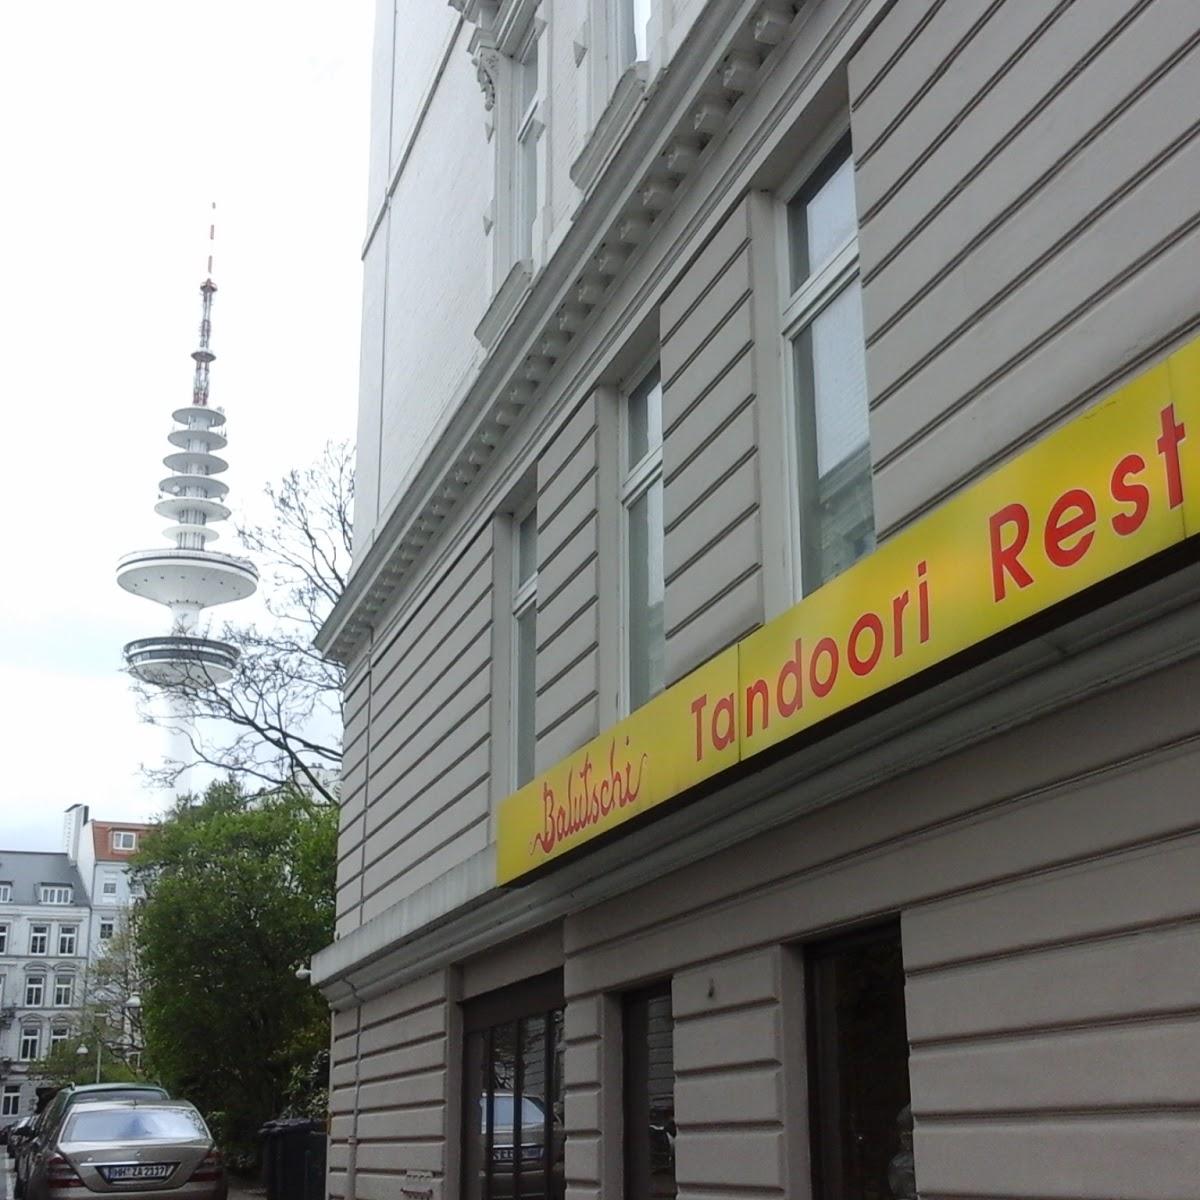 Restaurant "Balutschi" in Hamburg